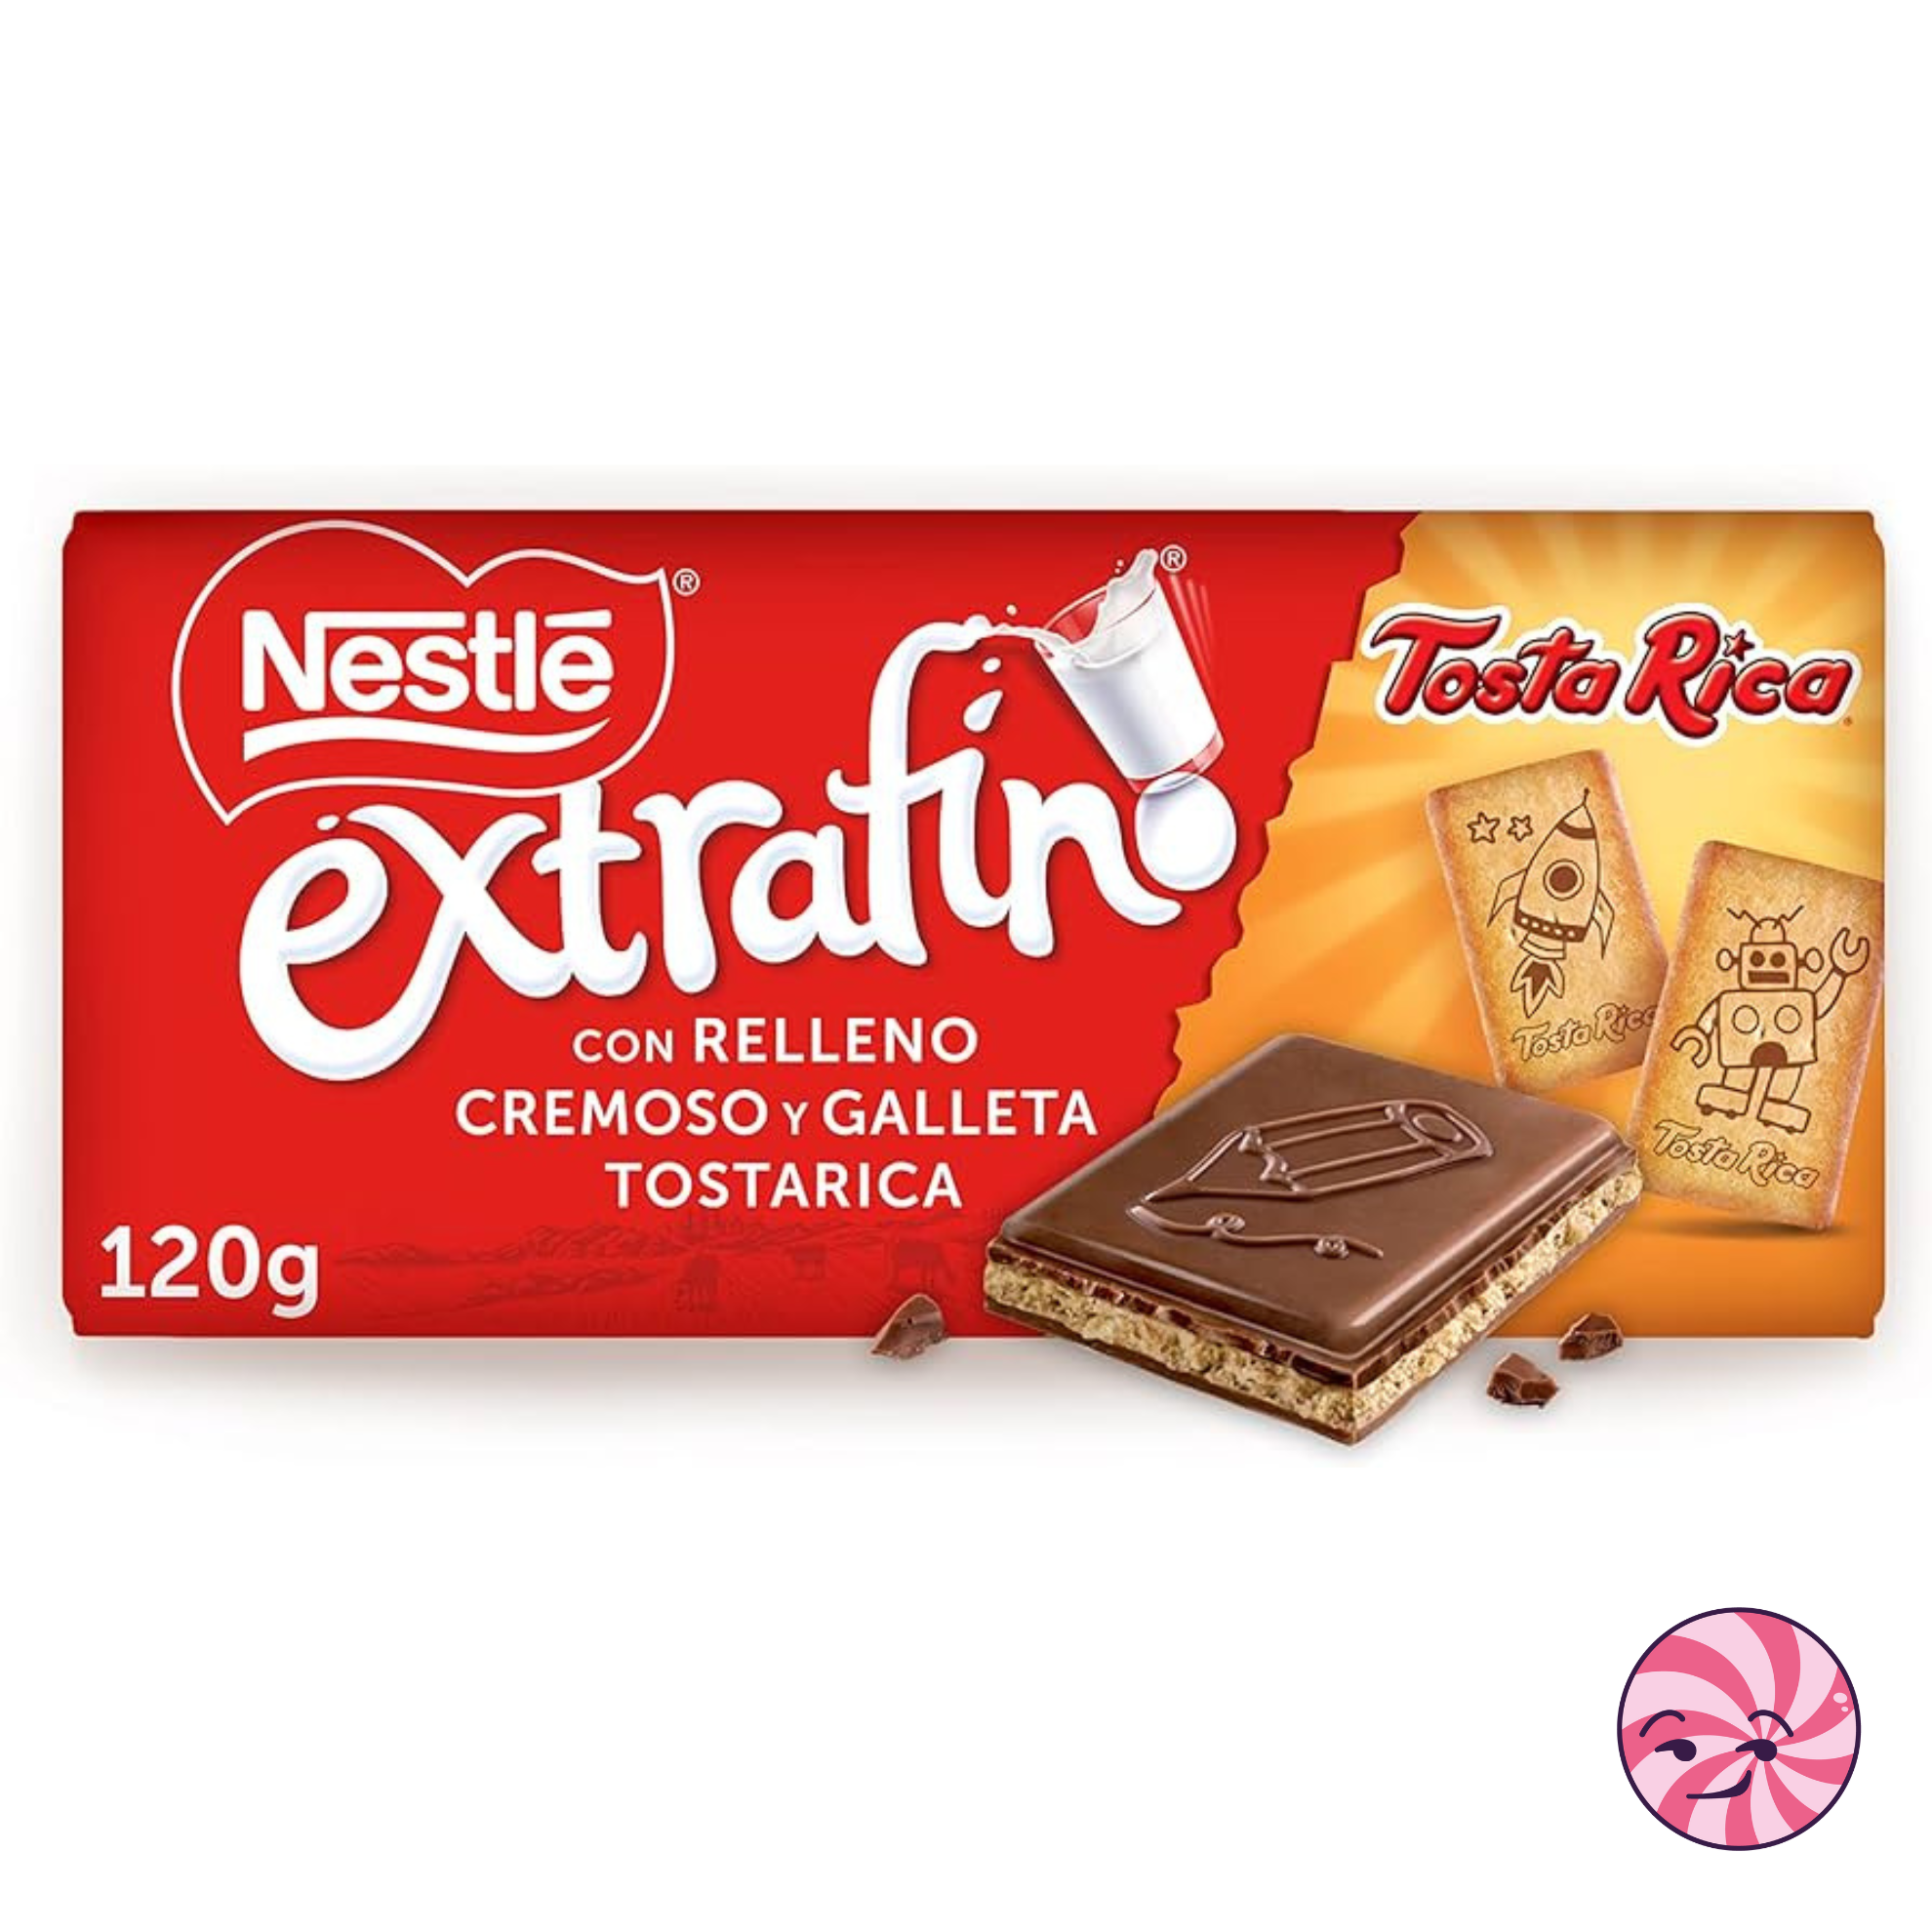 Nestlé extrafino TostaRica